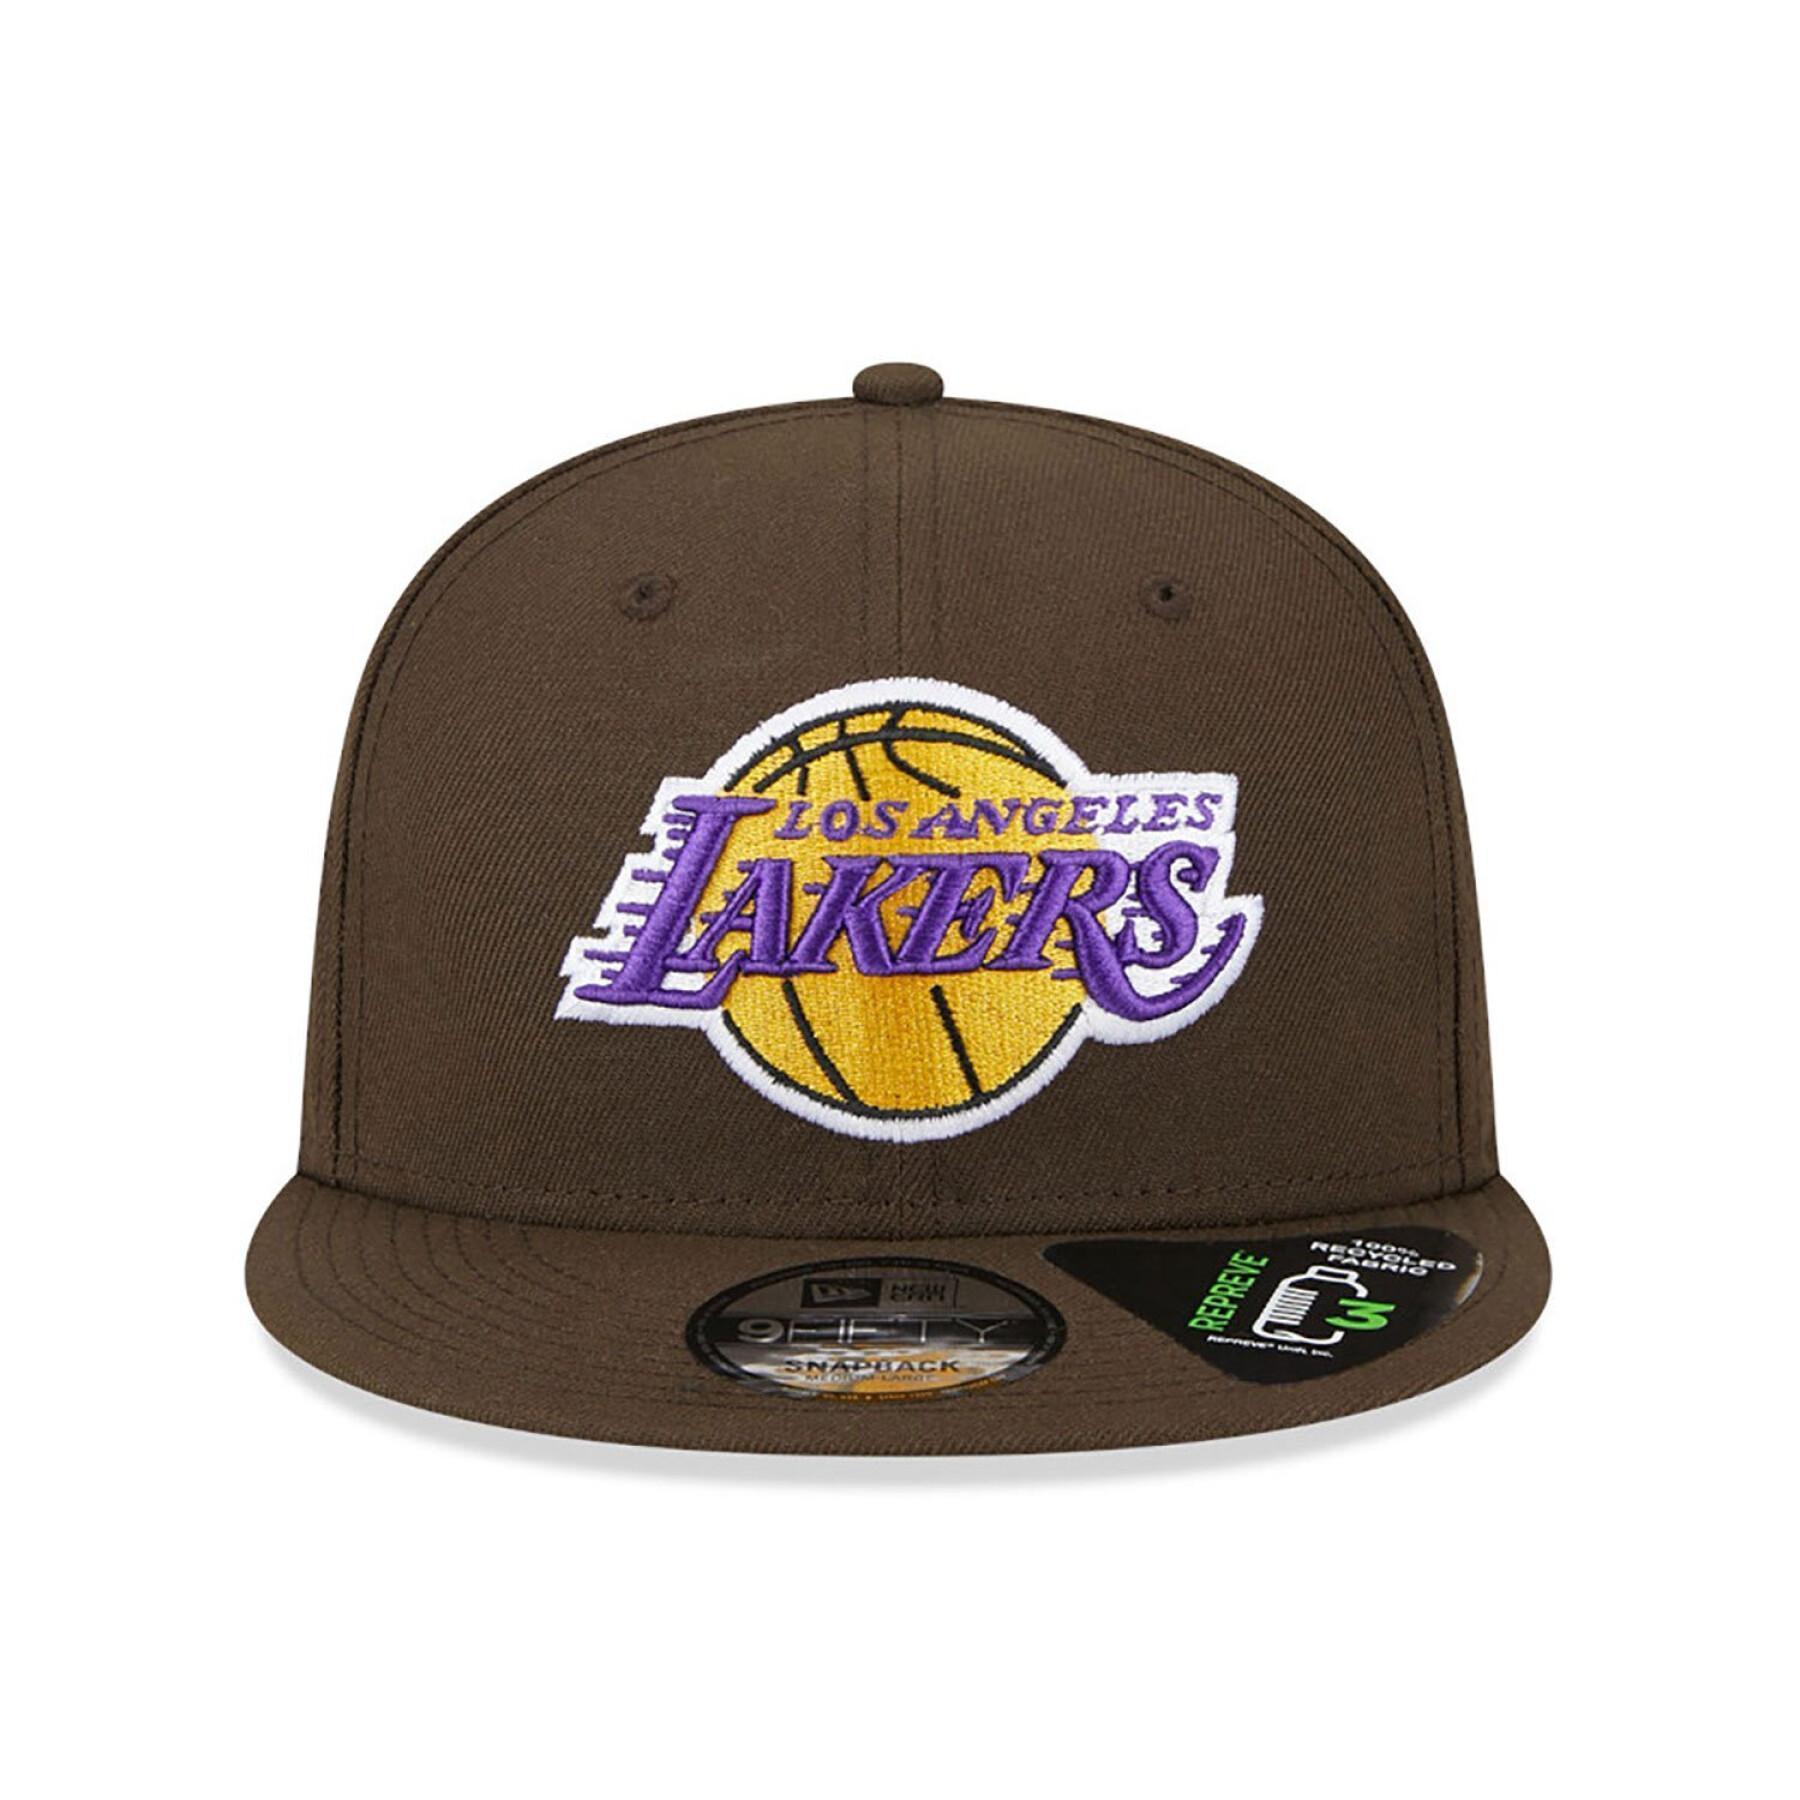 Snapback cap Los Angeles Lakers 9Fifty